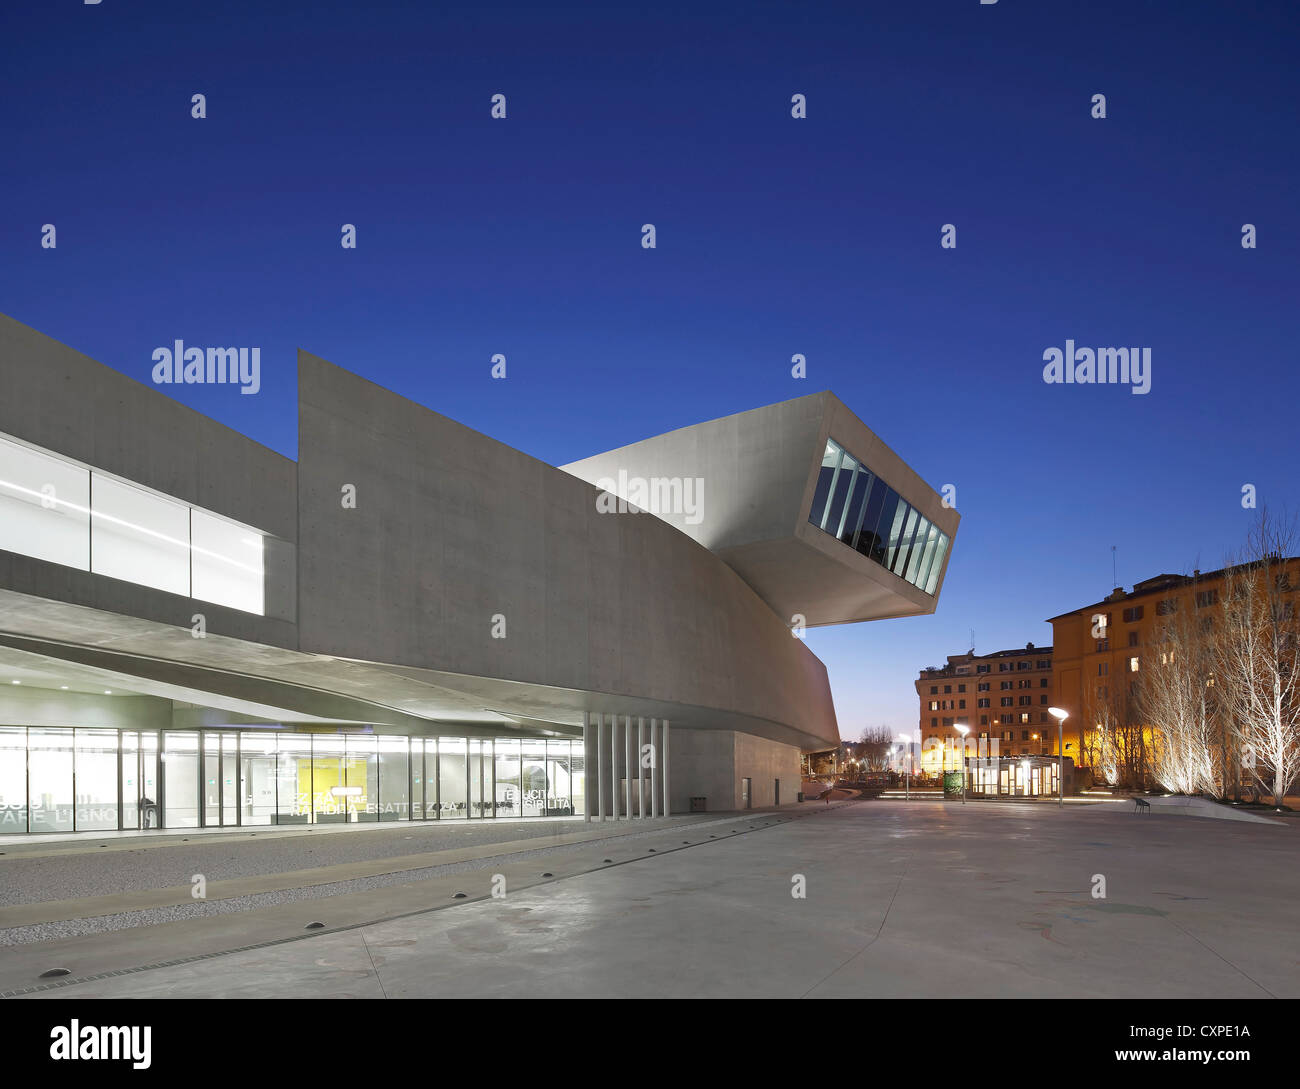 MAXXI – Nationalmuseum für das 21. Jahrhundert Kunst, Rom, Italien. Architekt: Zaha Hadid Architects, 2009. Abenddämmerung Exterieur. Stockfoto